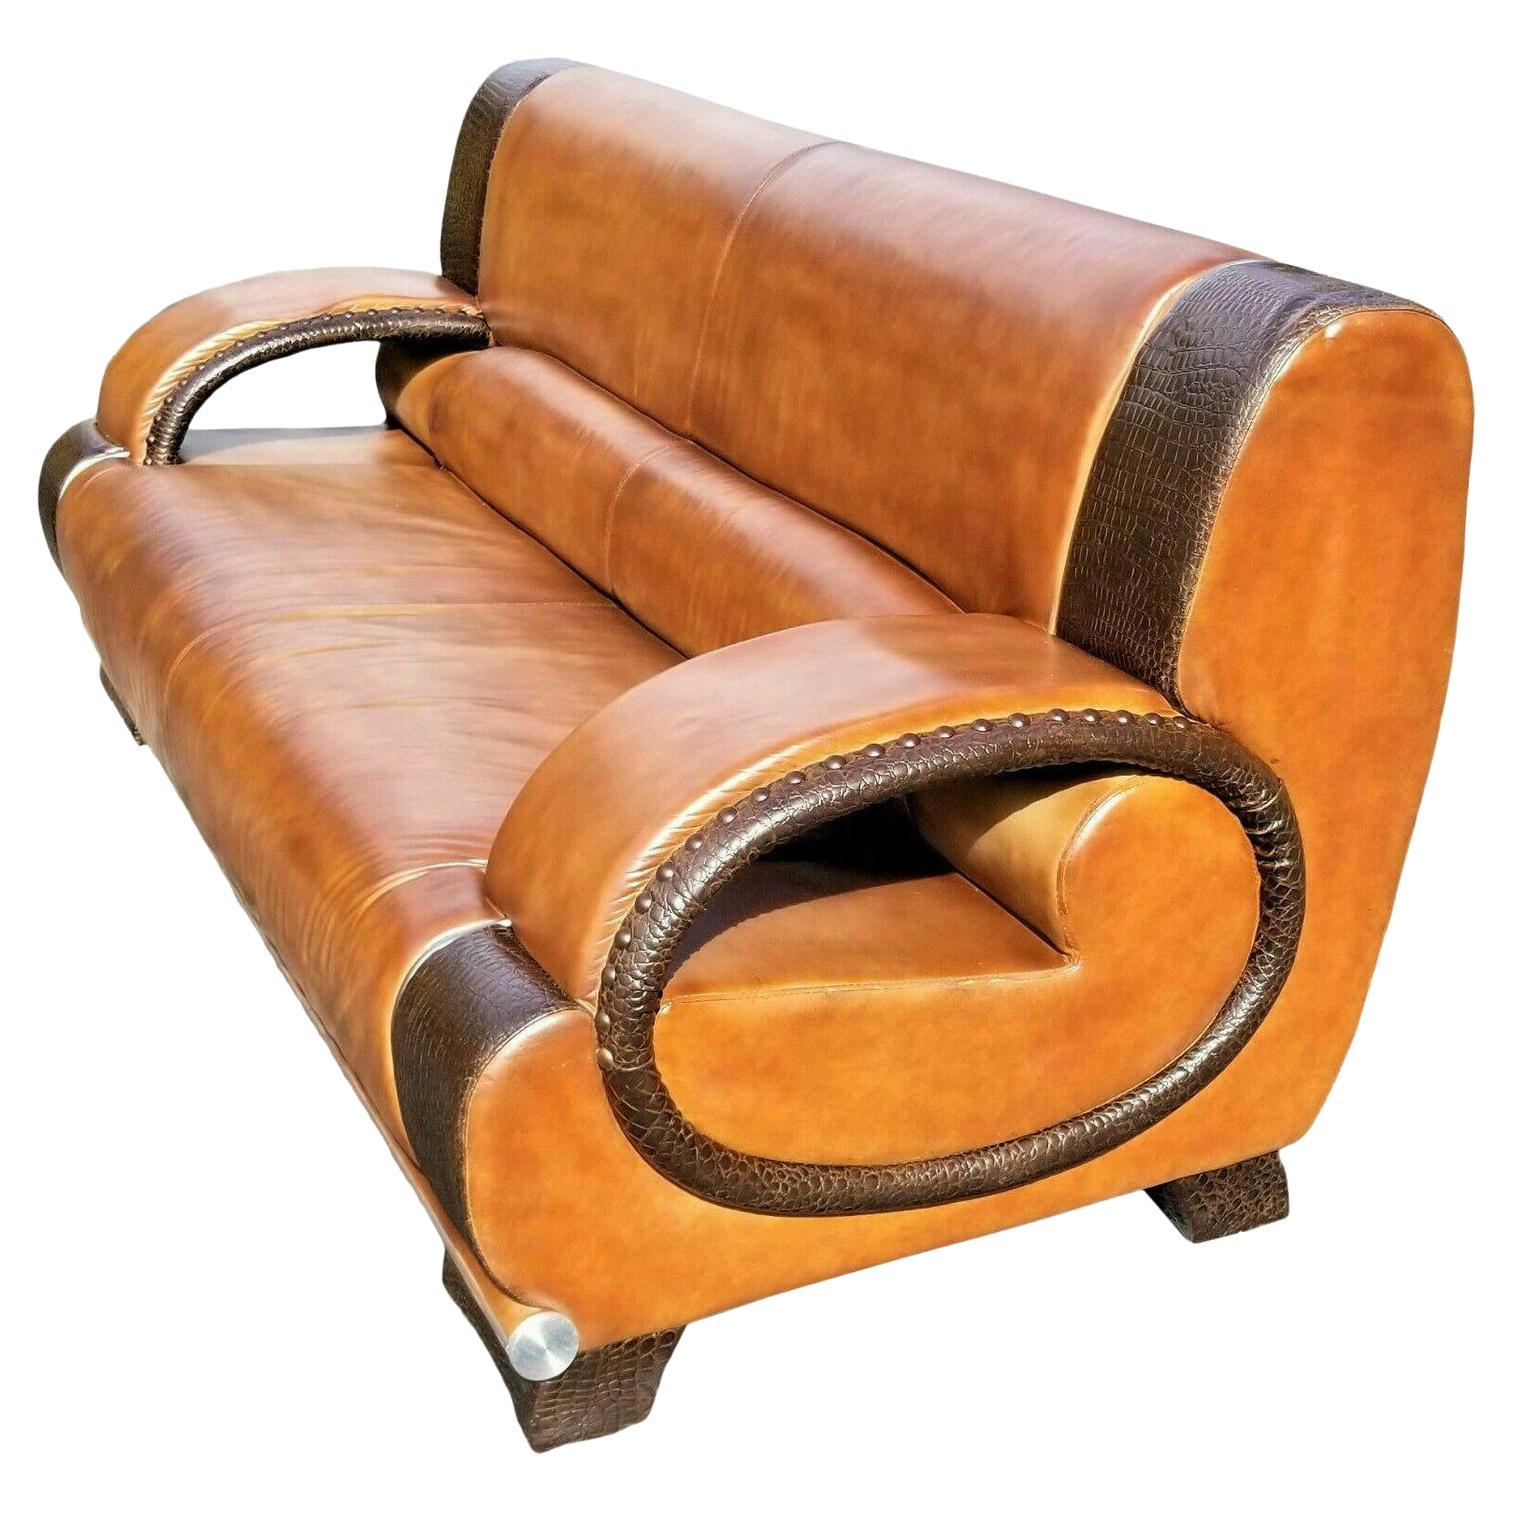 Italian Custom Made Leather and Alligator Skin Sofa For Sale at 1stDibs |  alligator storage bolton, custom made italian furniture